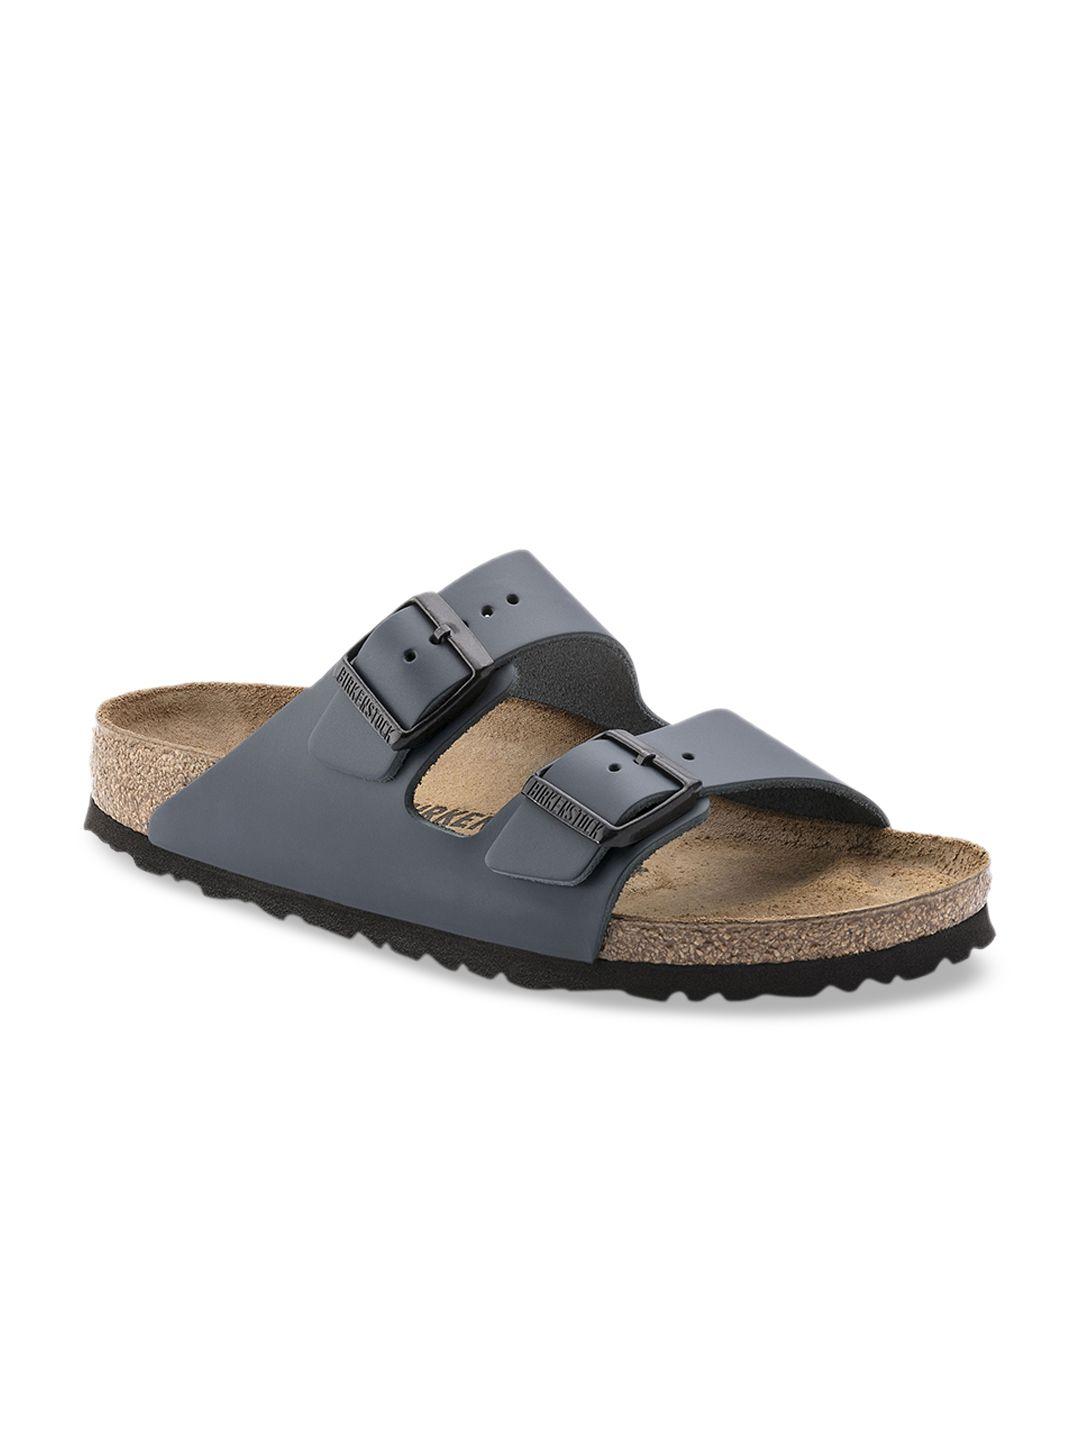 birkenstock unisex navy blue arizona natural leather narrow width sandals